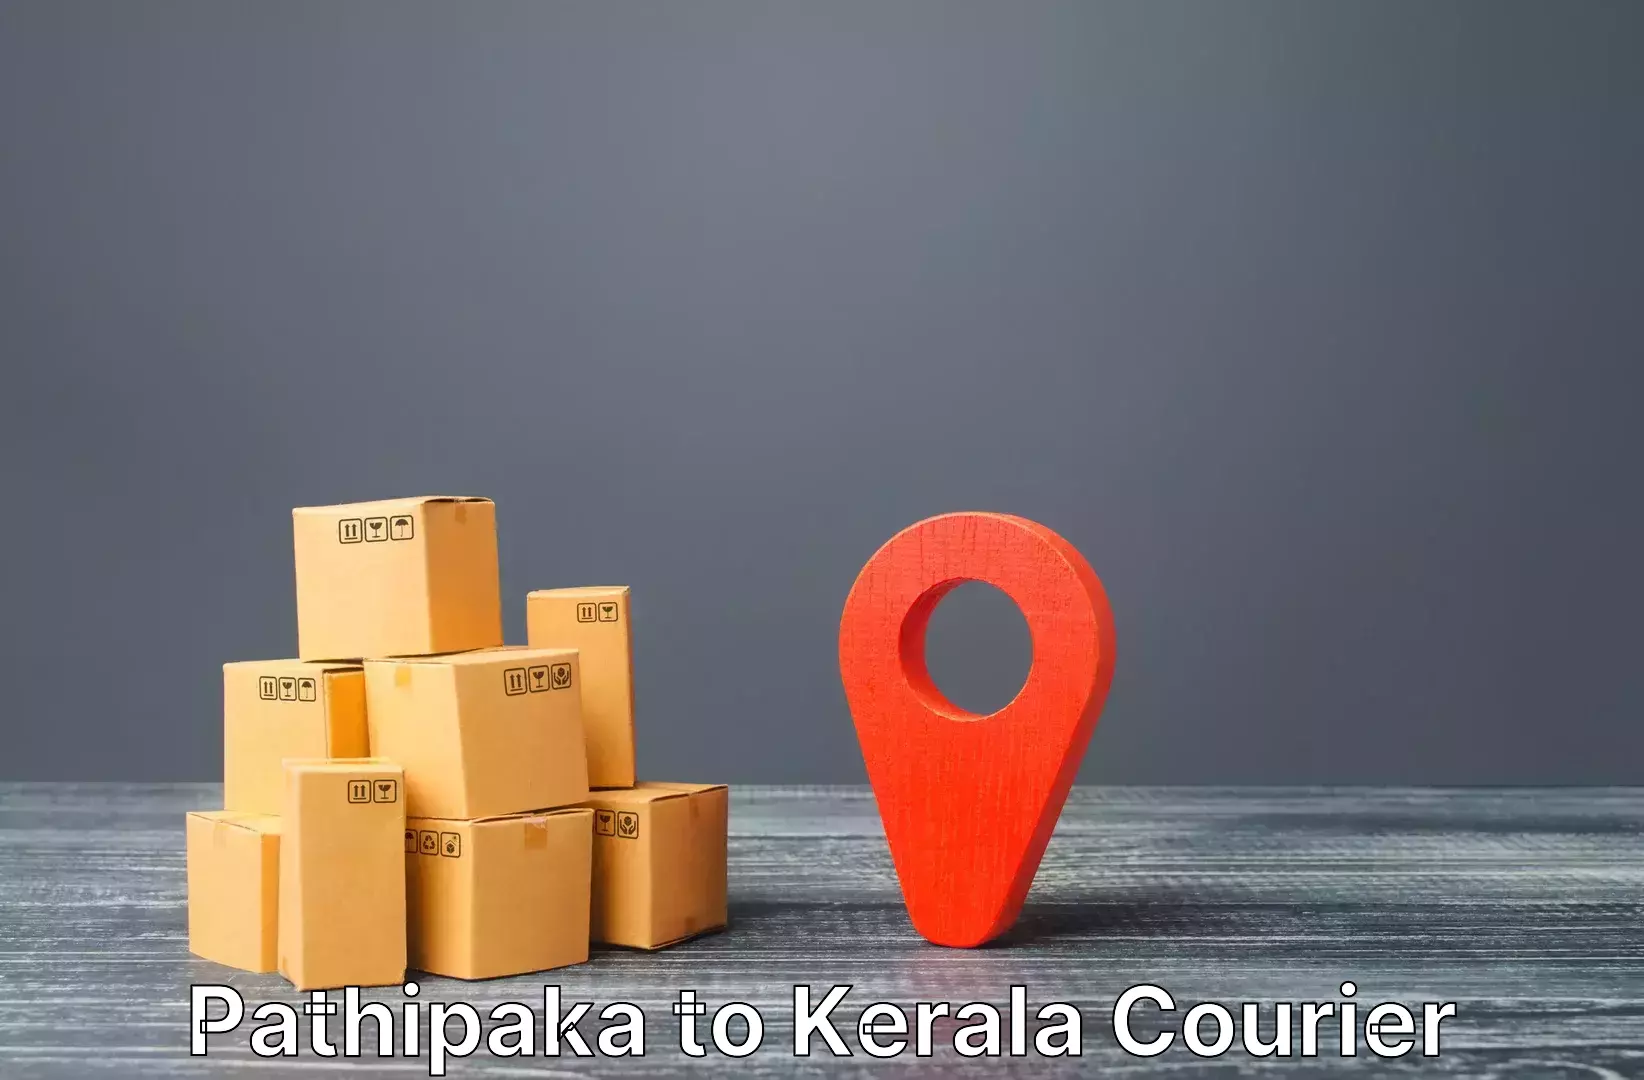 Luggage delivery app Pathipaka to Kerala